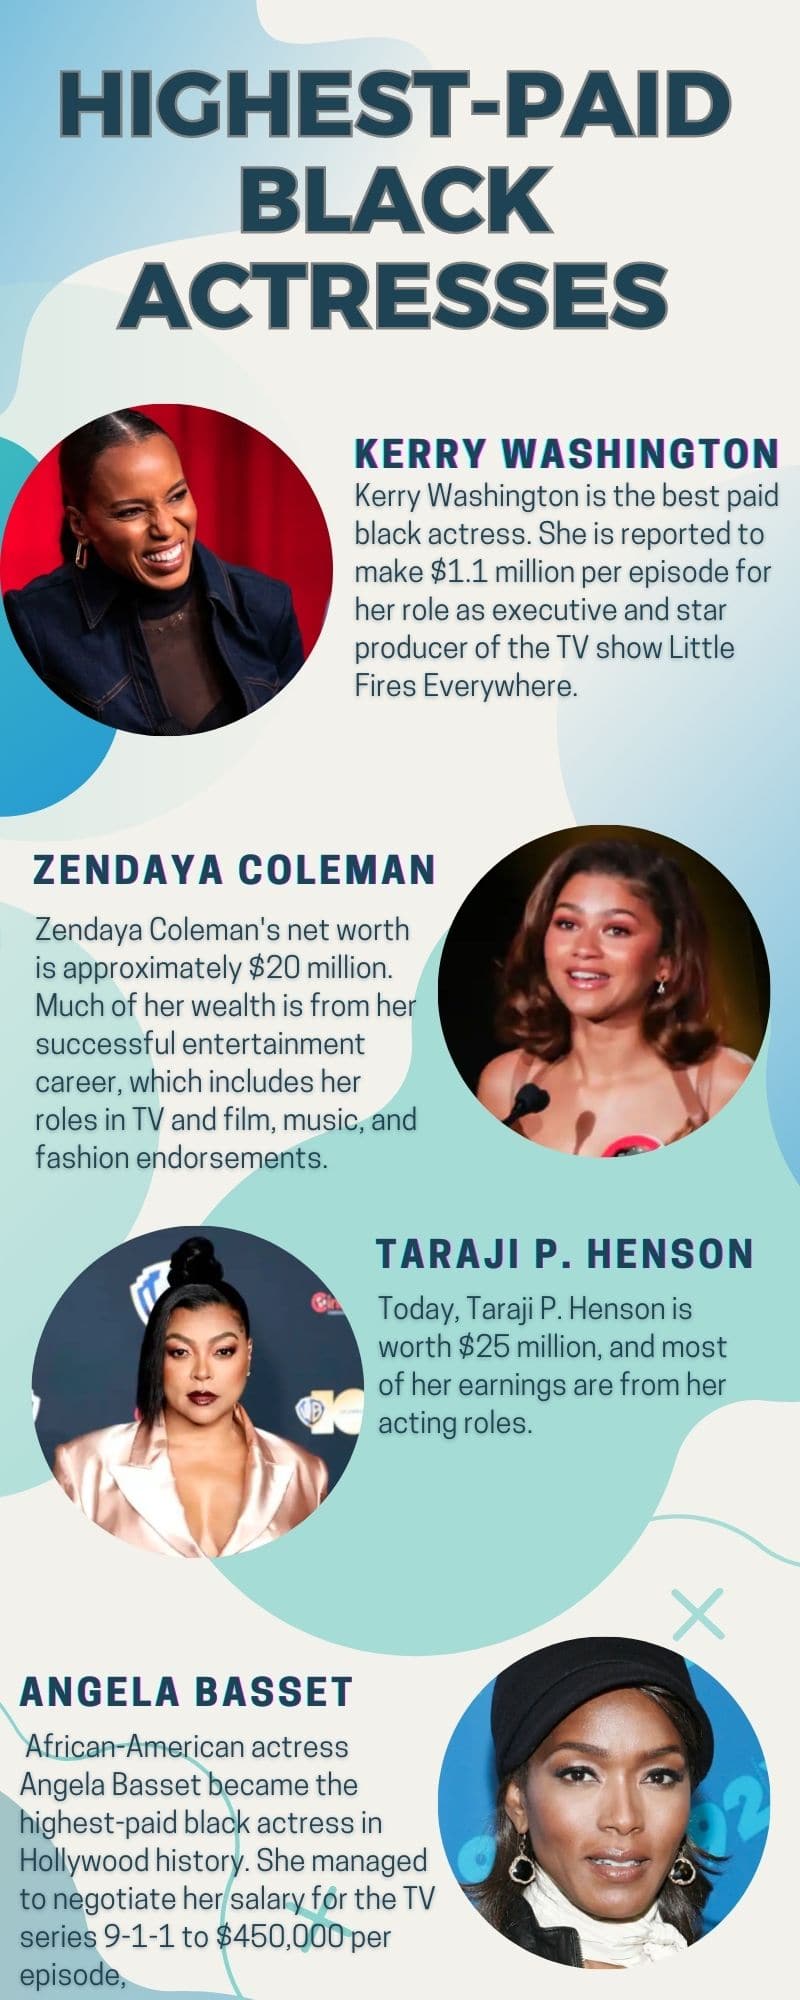 Highest-paid black actresses